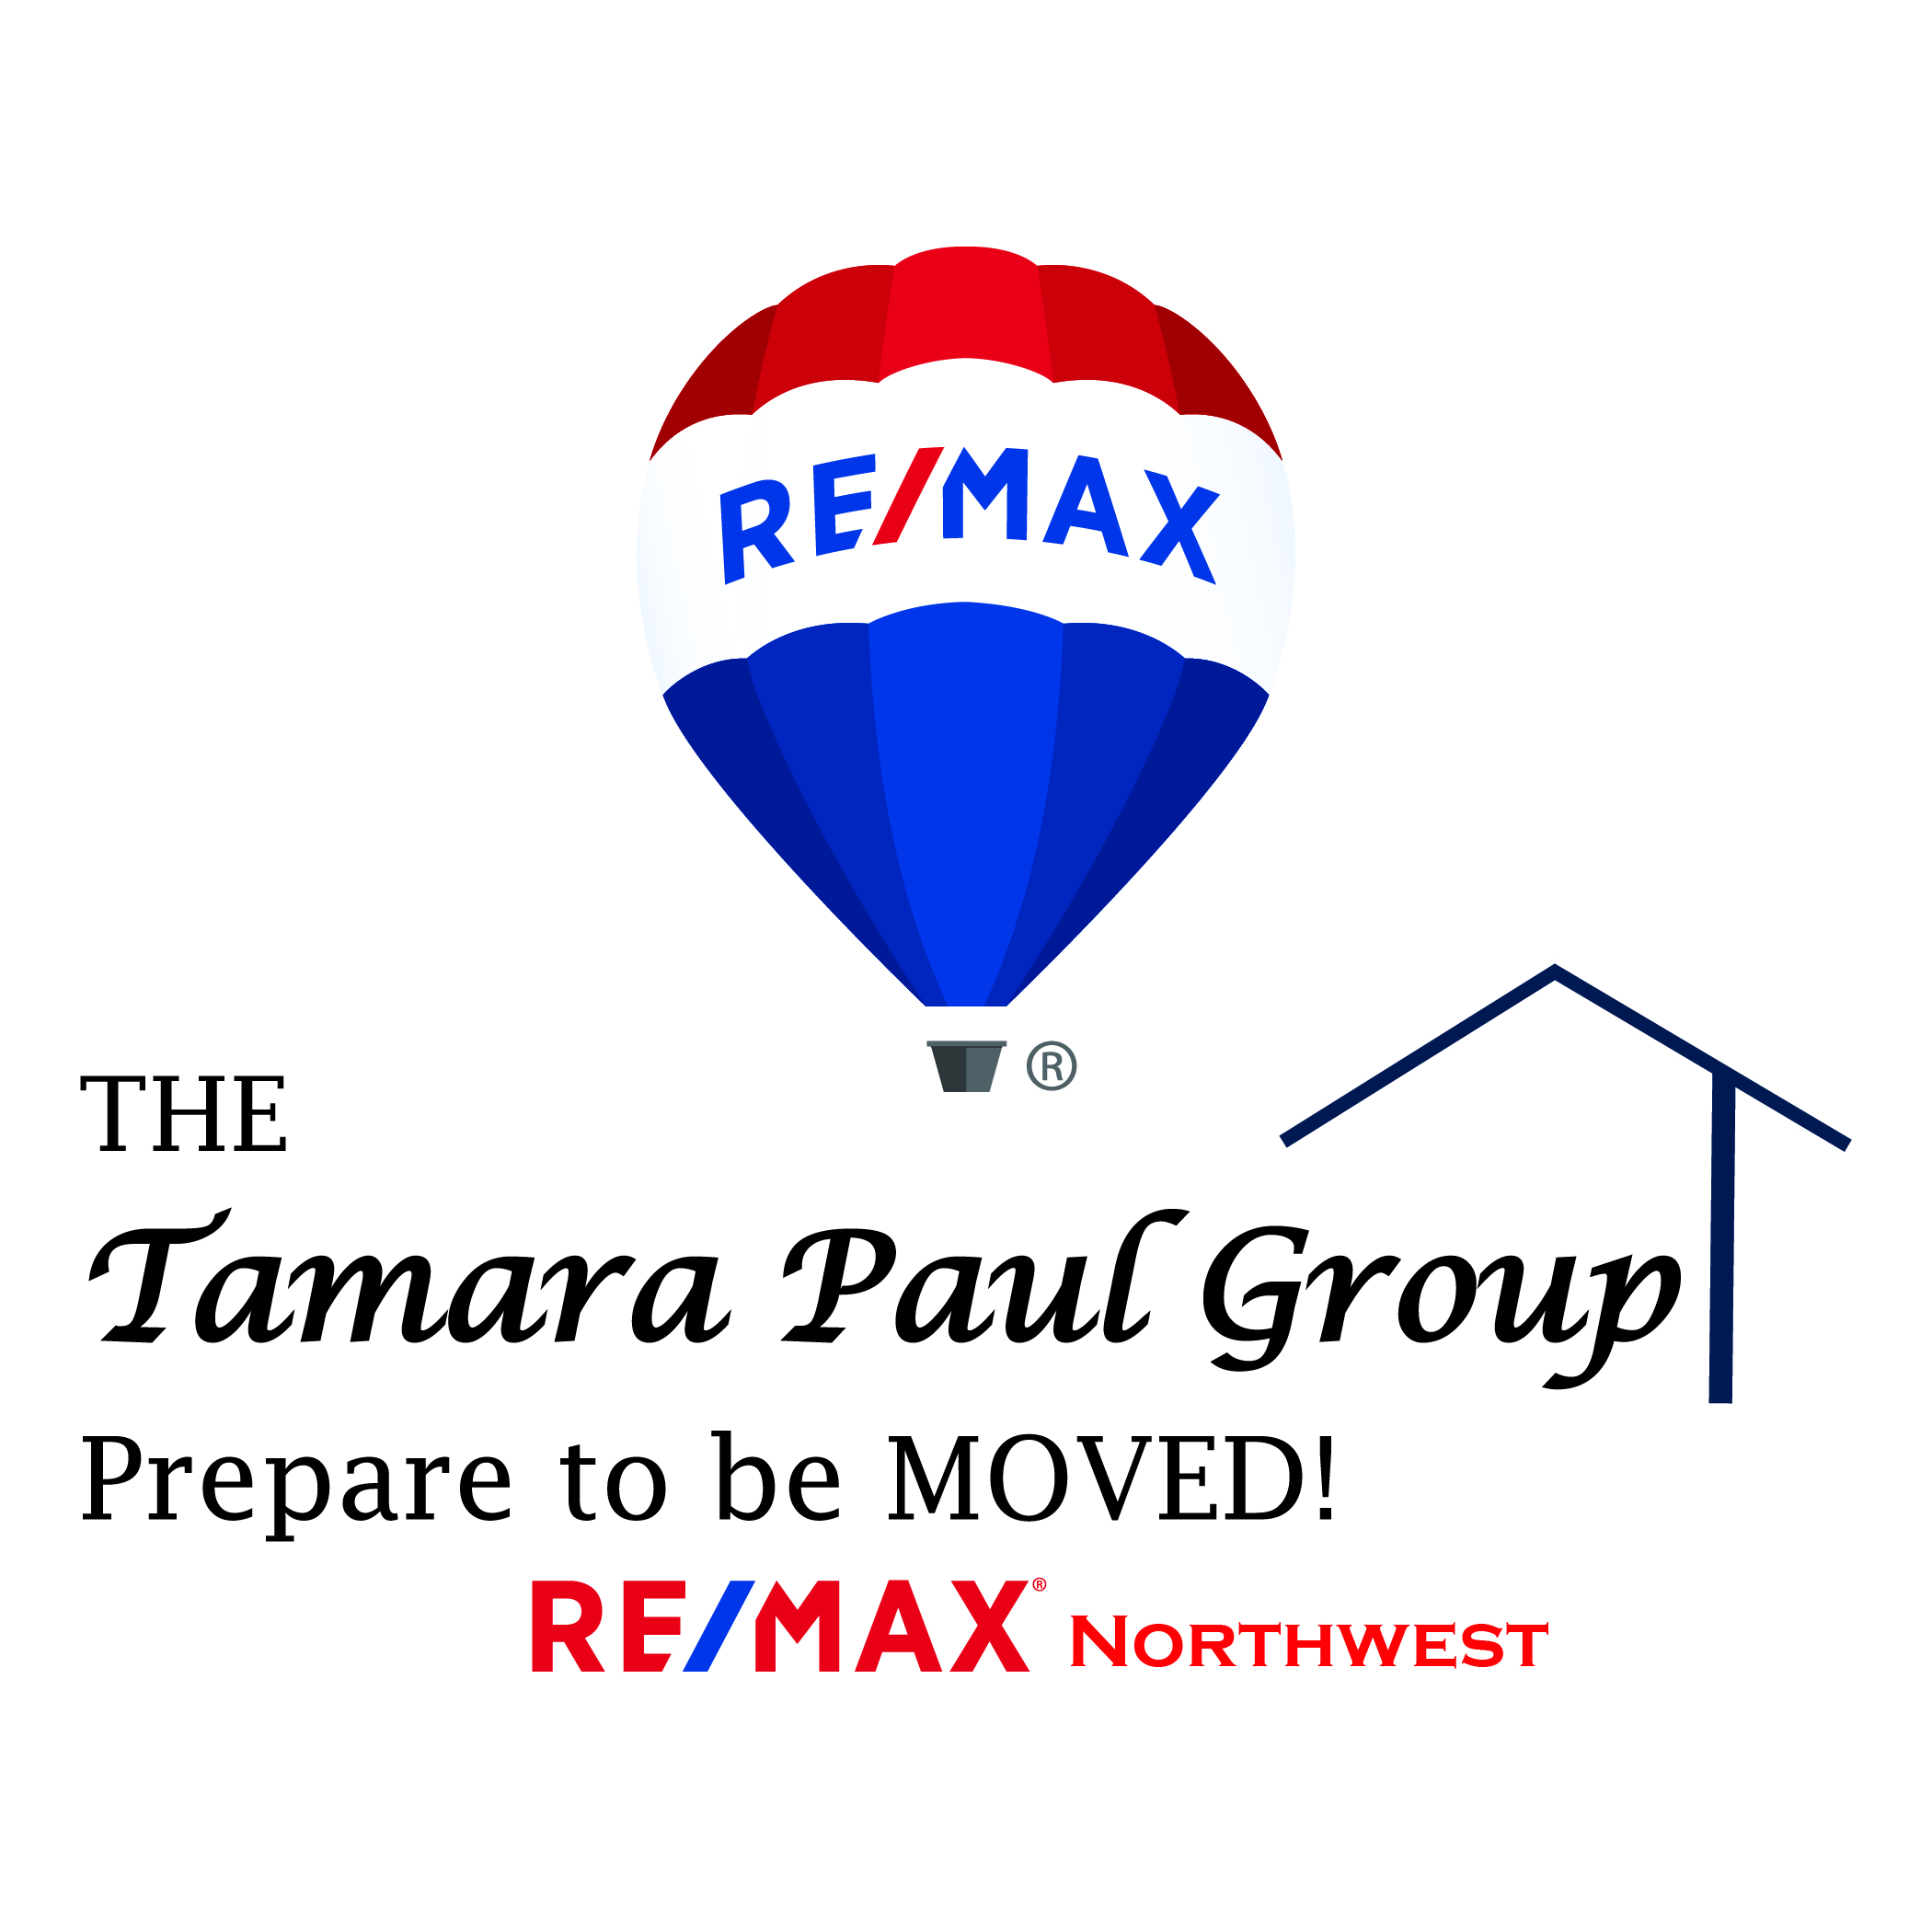 The Tamara Paul Group - RE/MAX Northwest